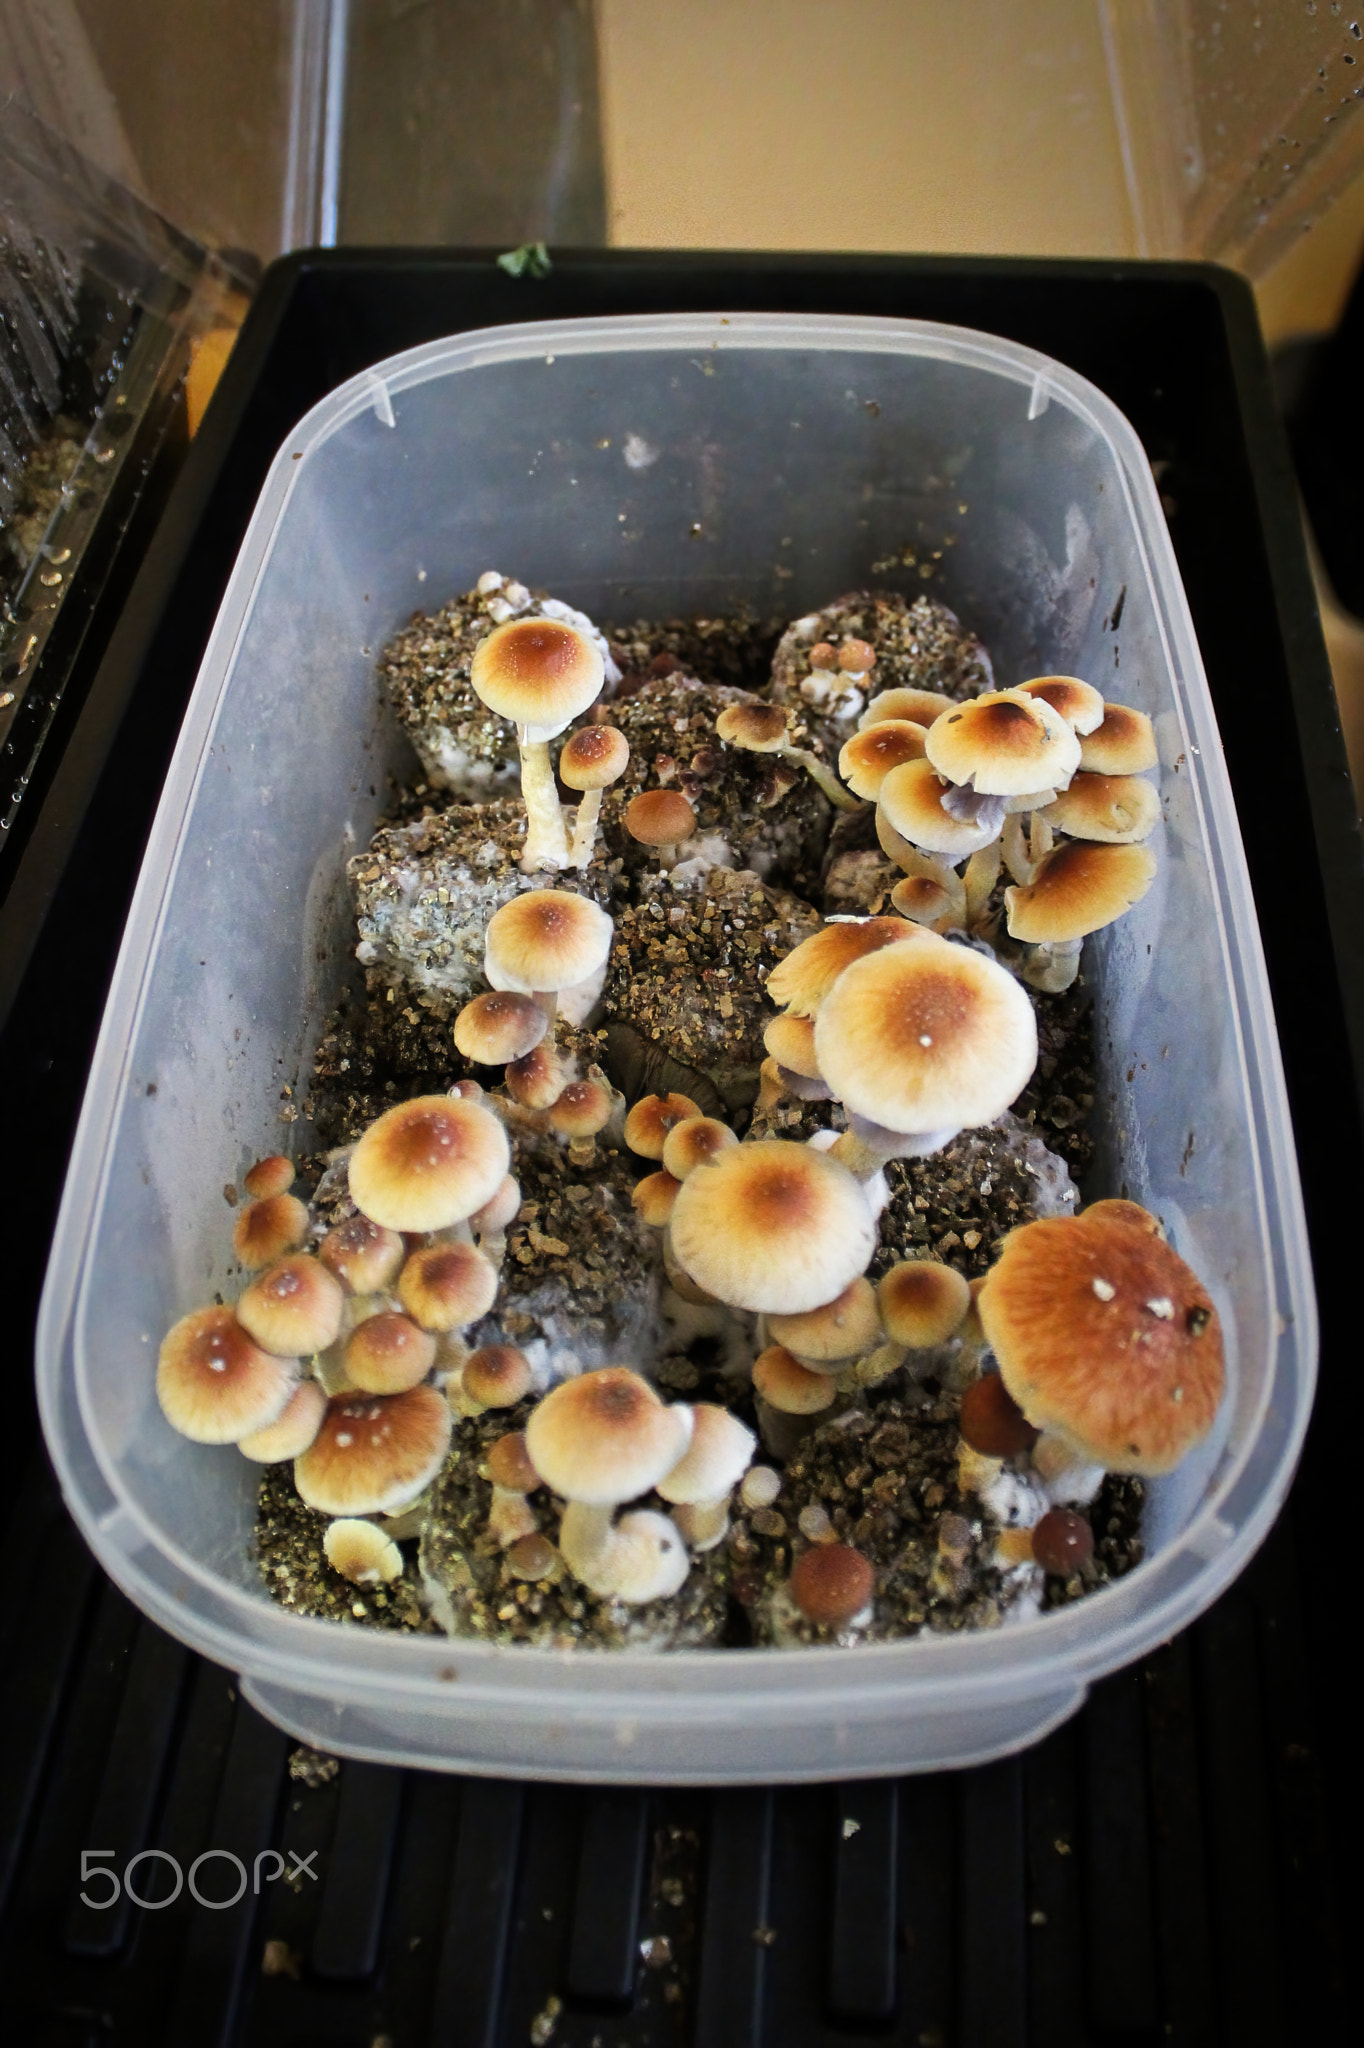 A box full of magic mushrooms ready to be picked